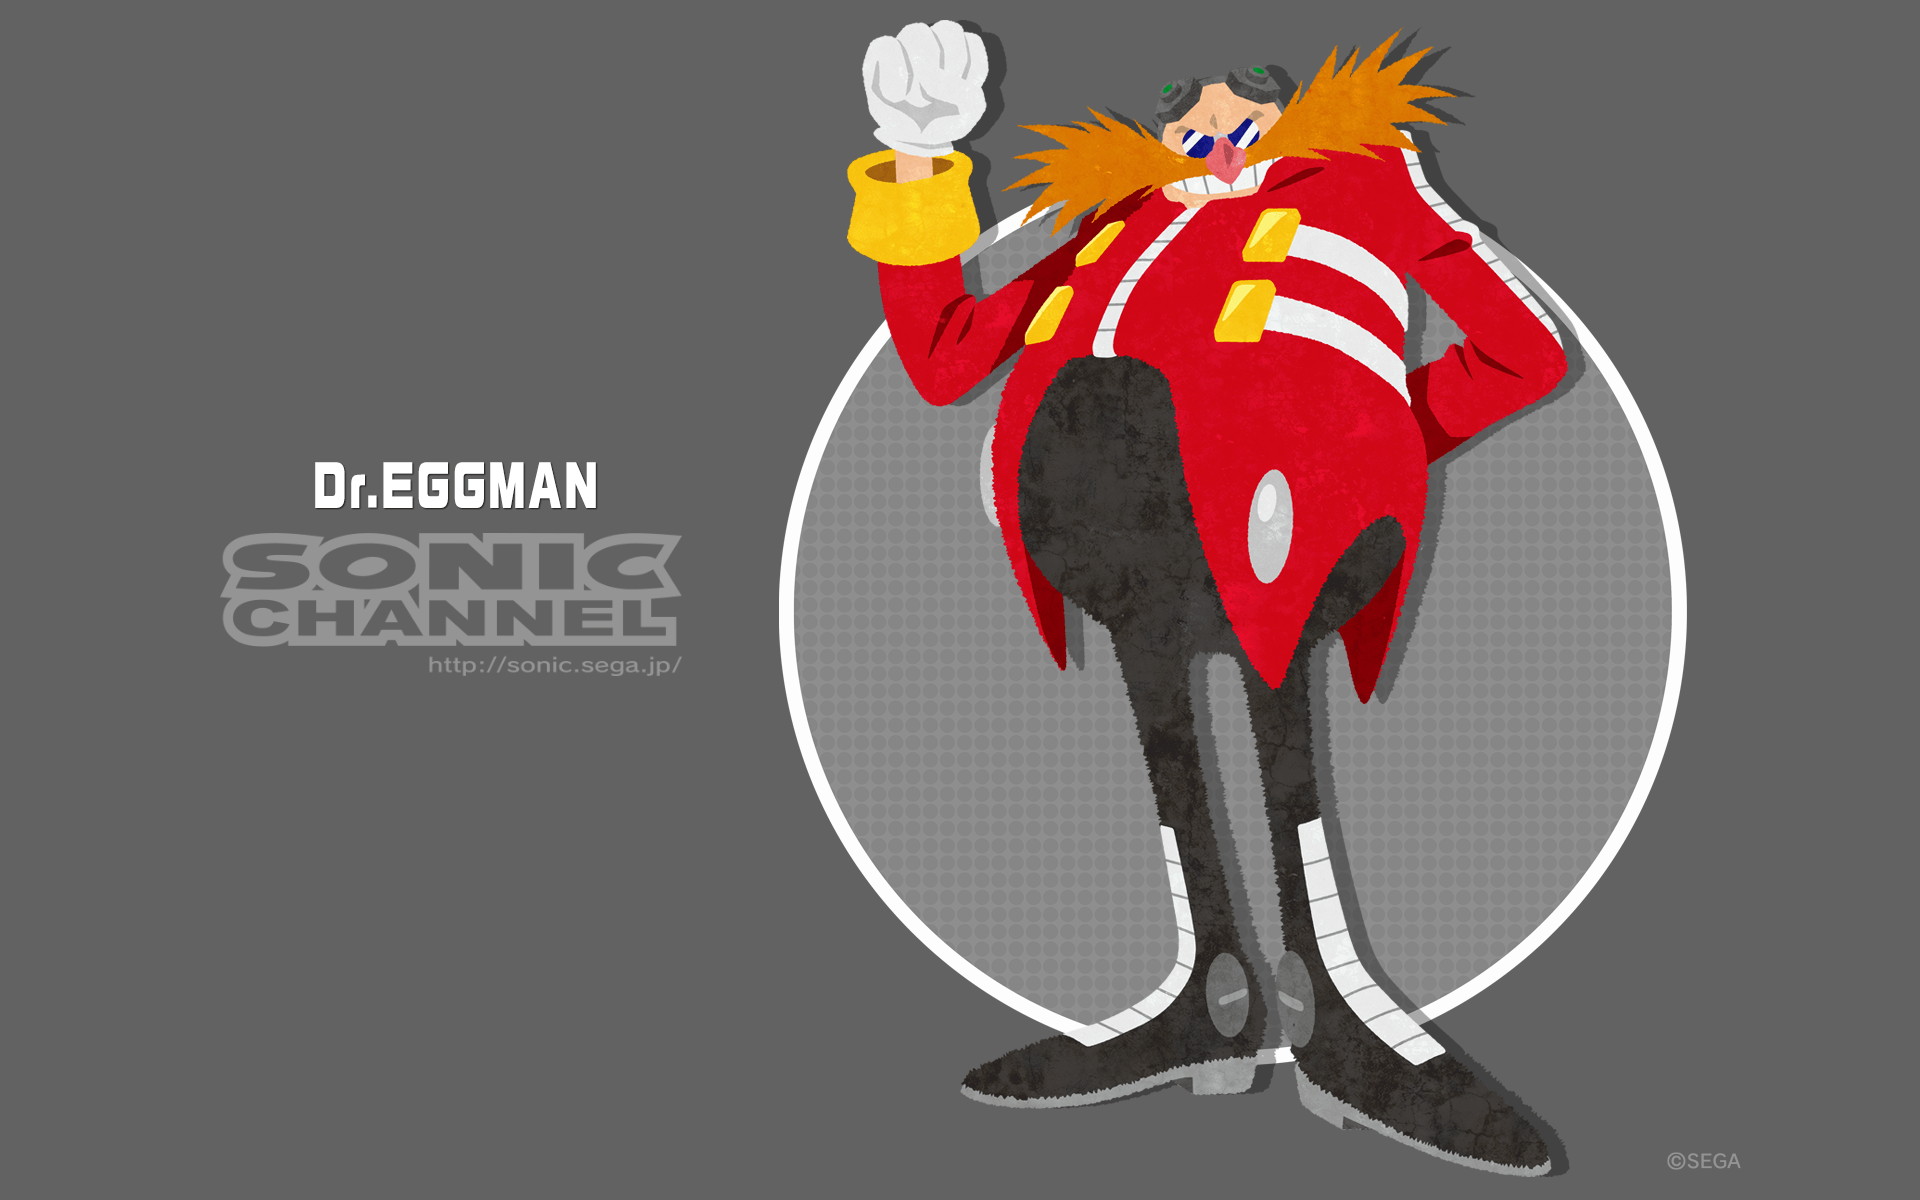 10. Eggman Channel